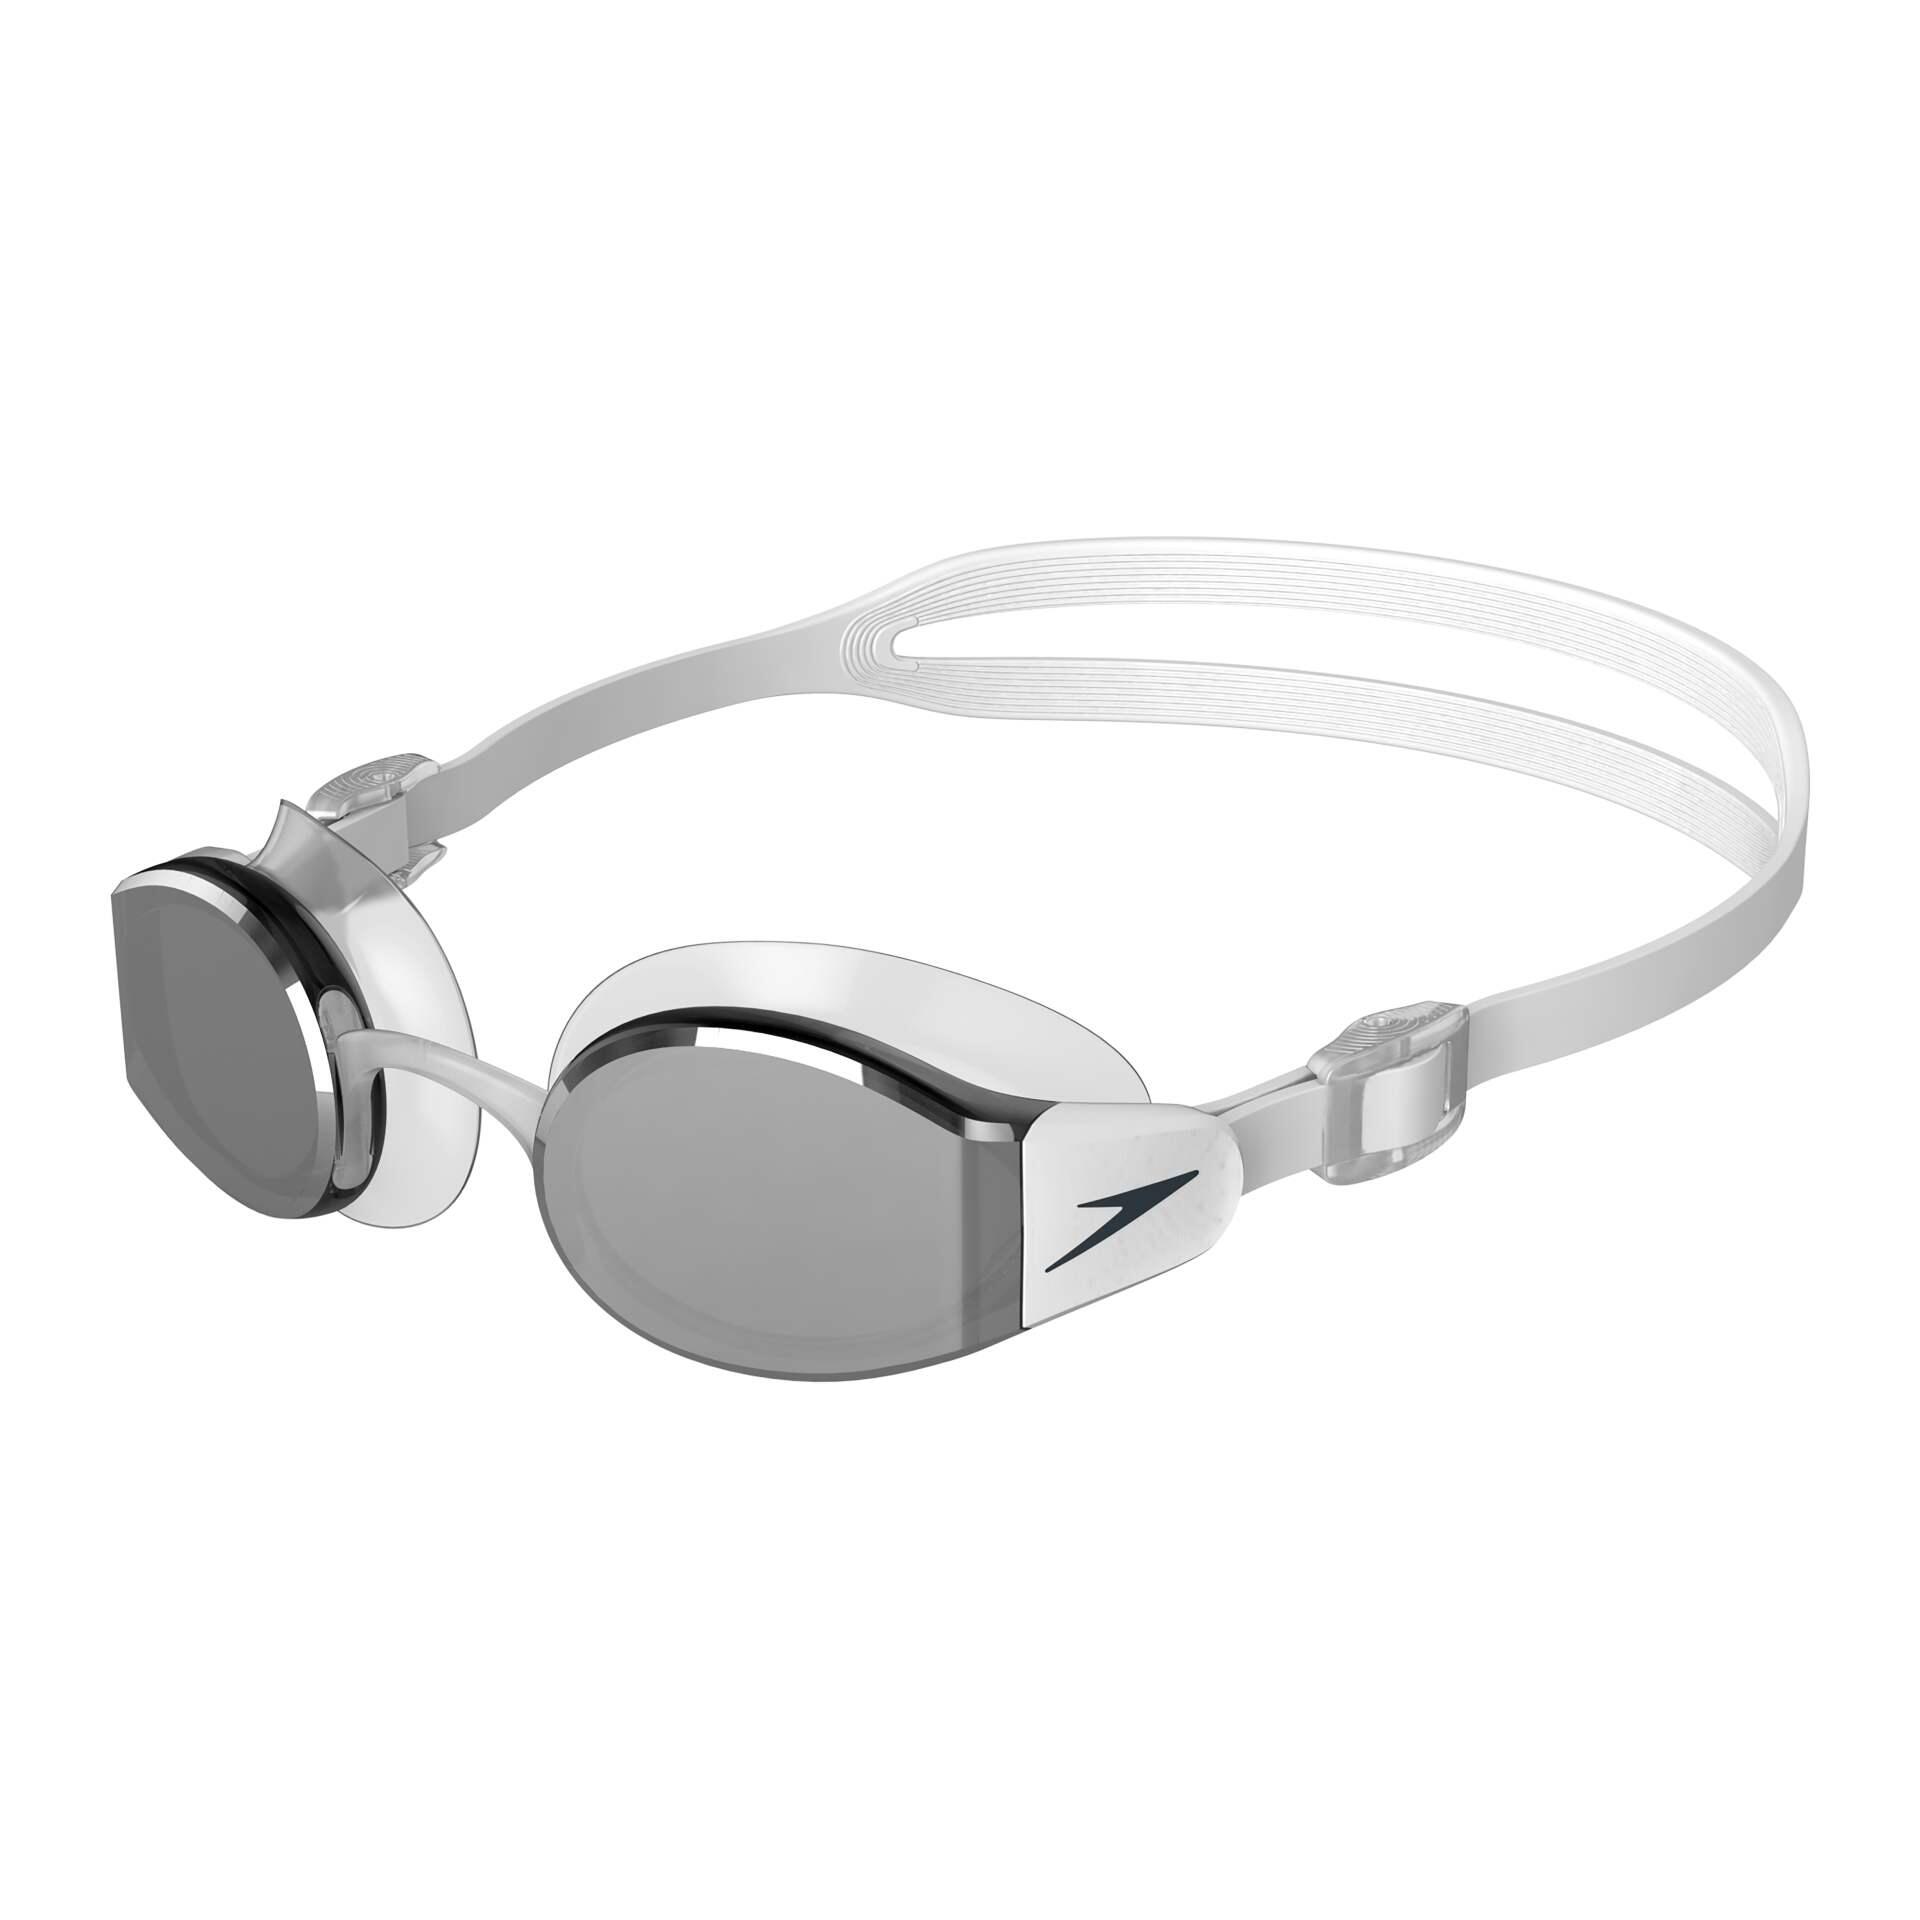 SPEEDO Speedo Mariner Pro Mirrored Goggles